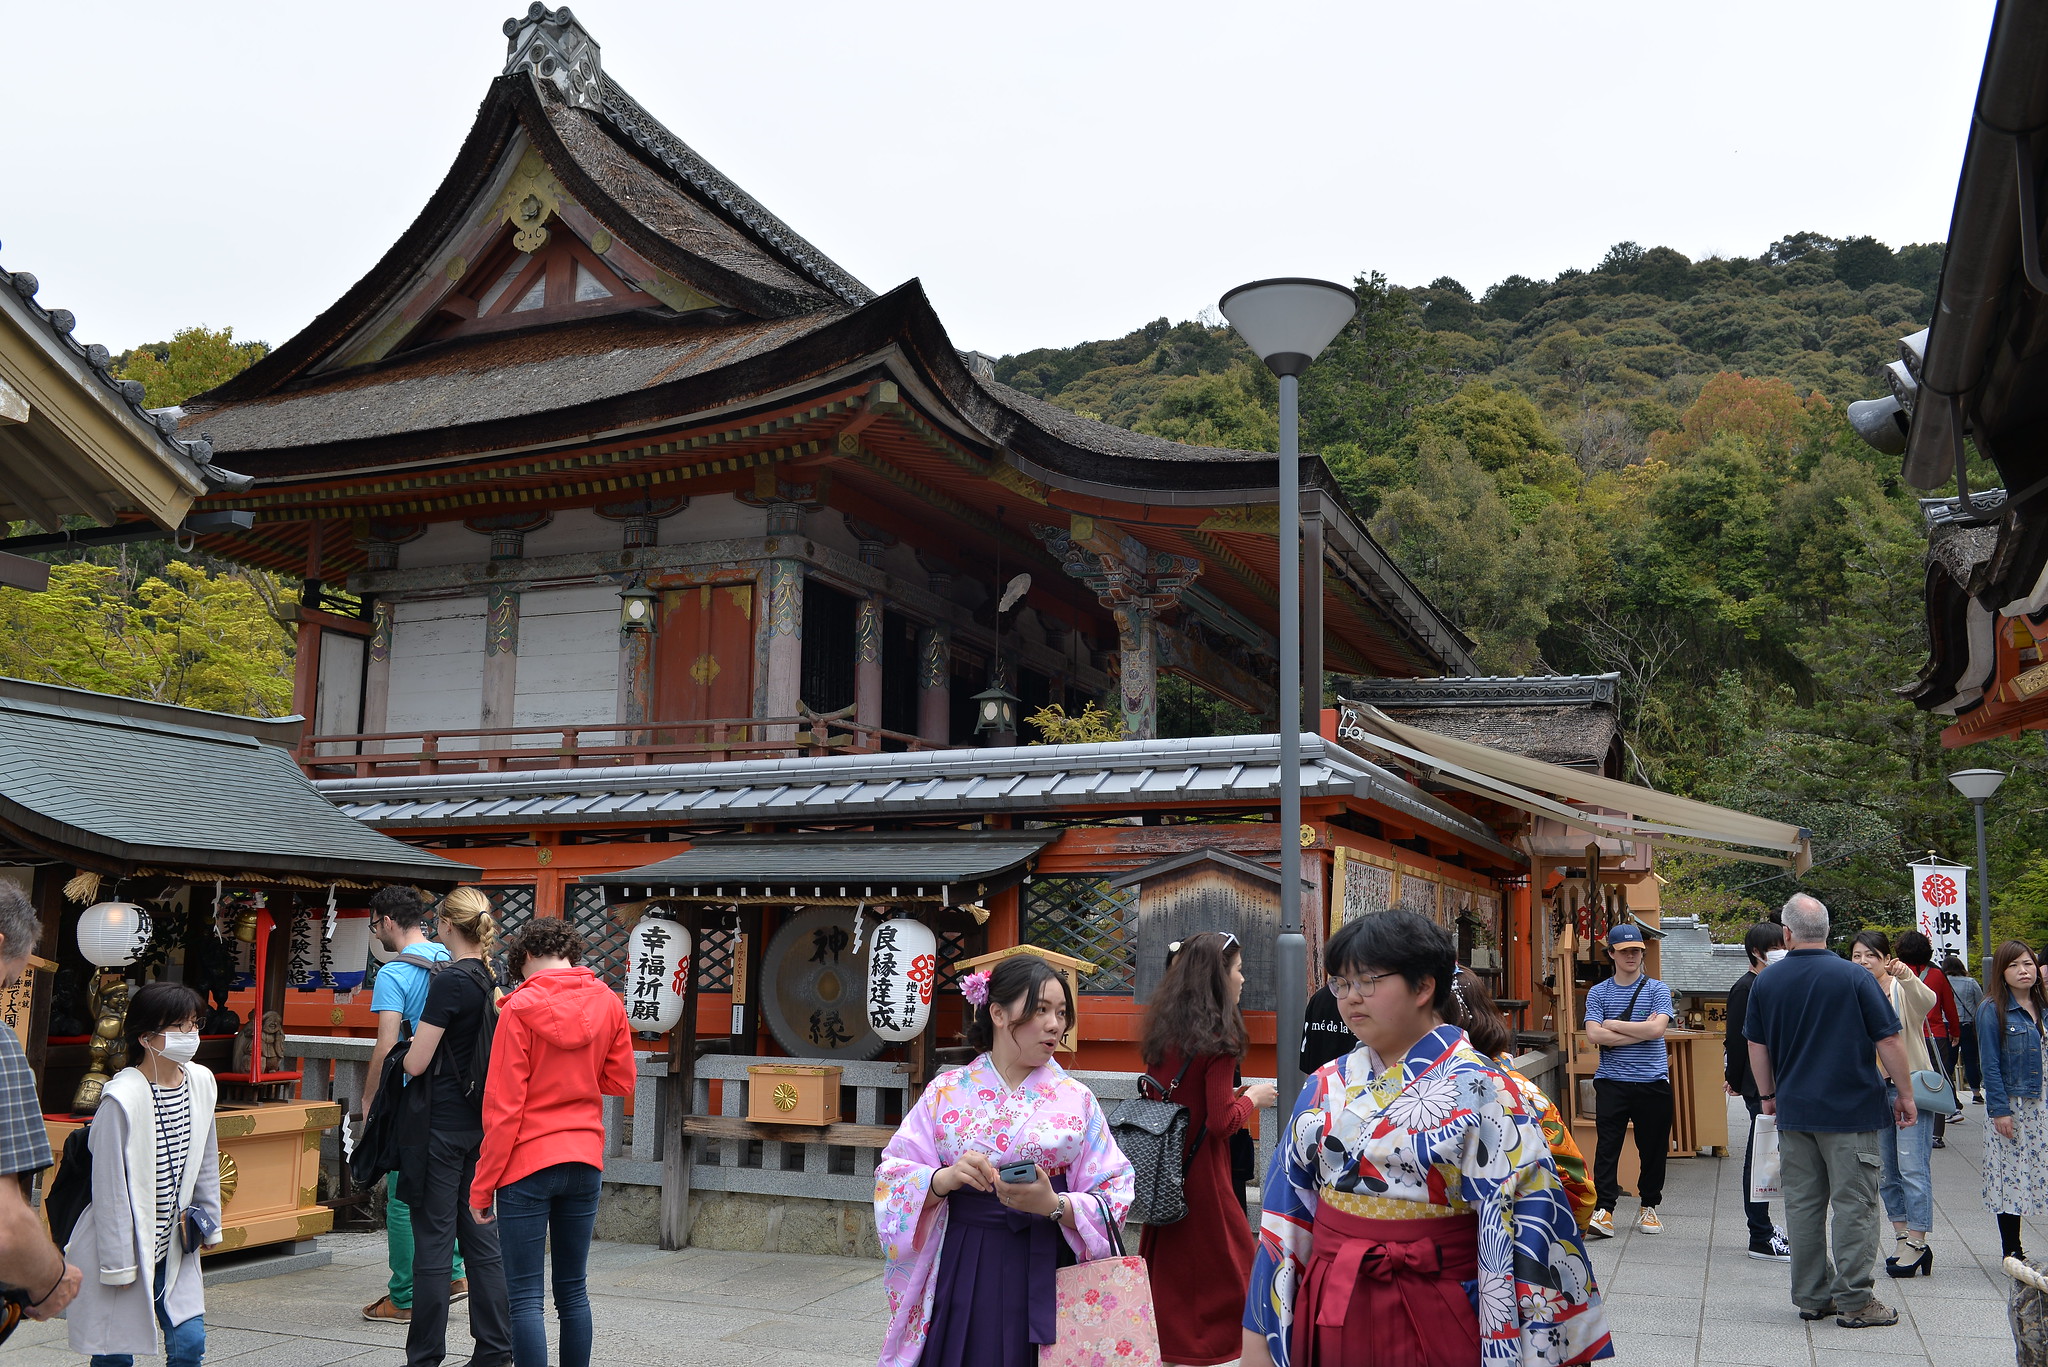 Japan Sets December Tourism Record With 2.7 Million Visitors